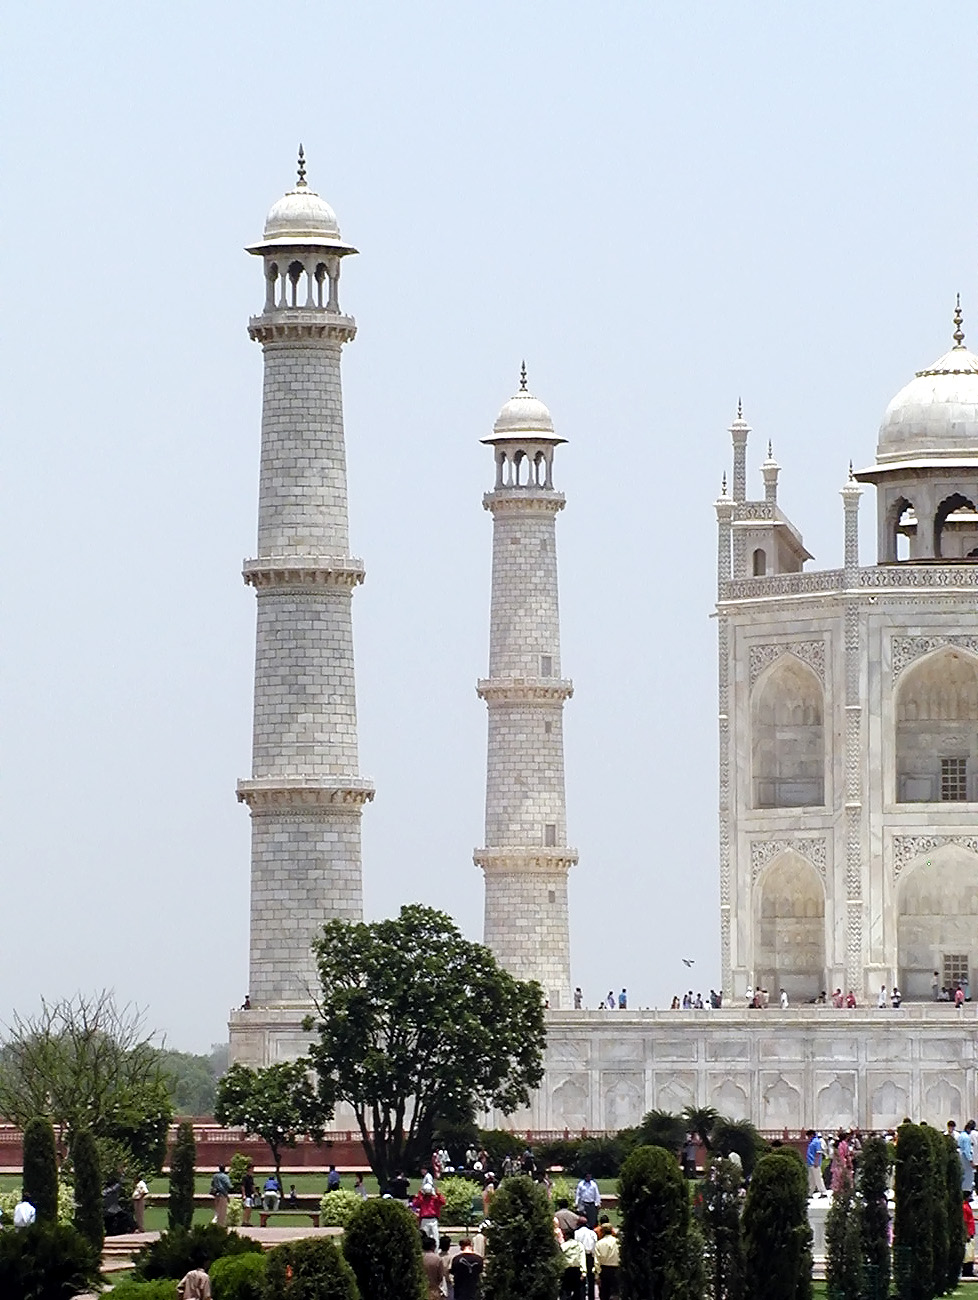 10-Jun-2001 12:03 - Agra - The Taj Mahal - Minarettes to the west of the mausoleum